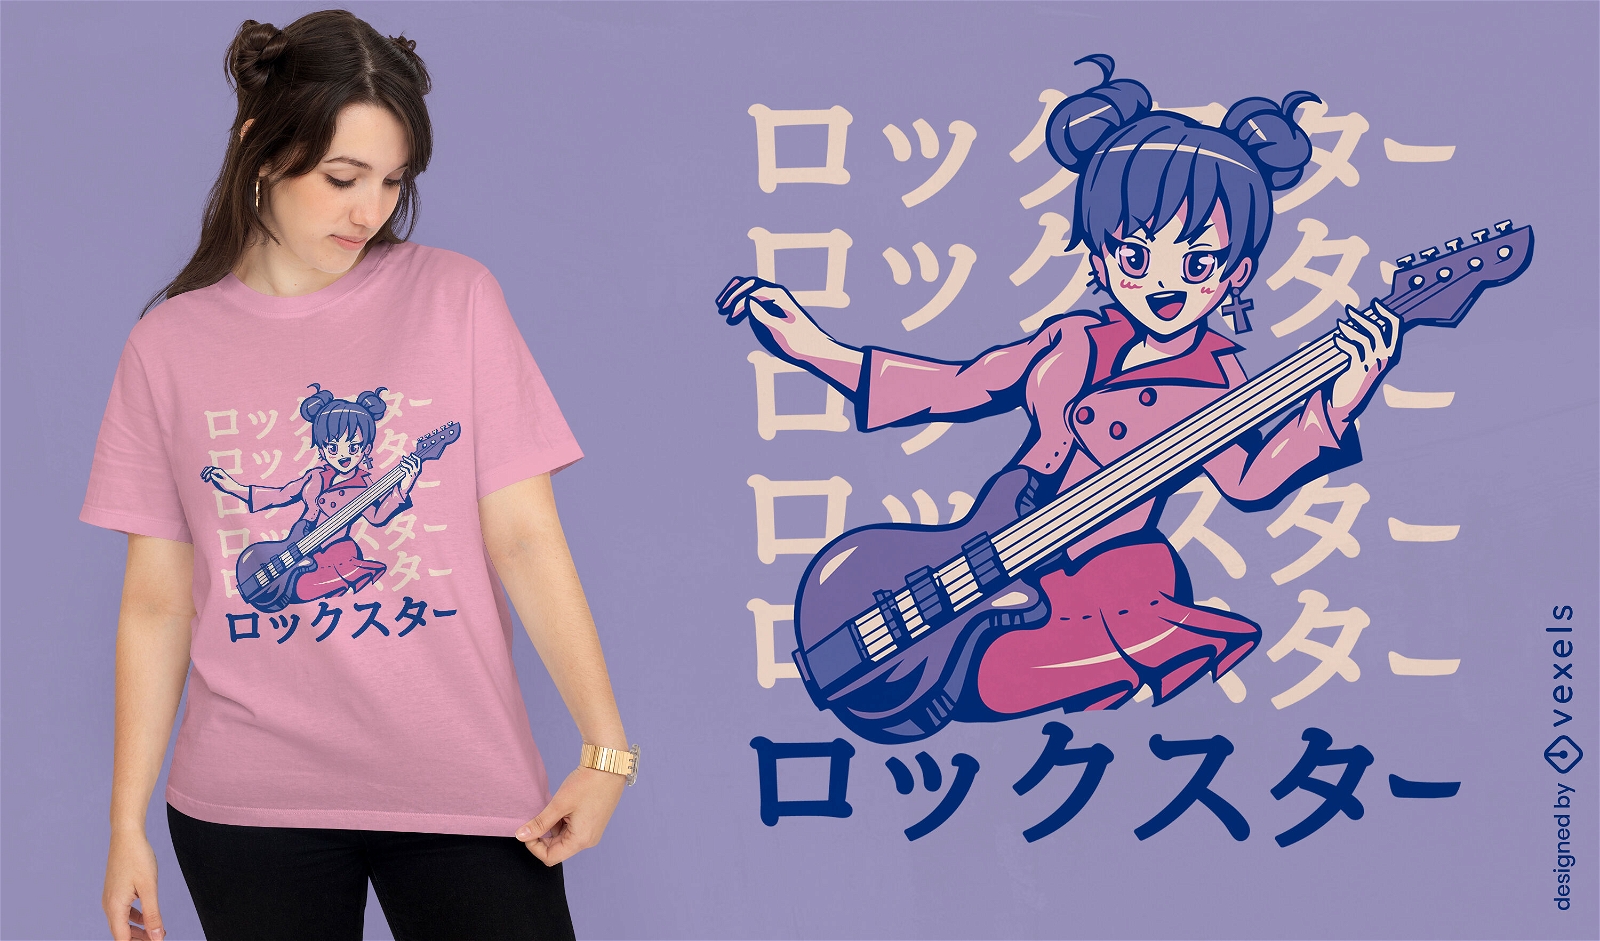 Rockstar anime girl guitar t-shirt design